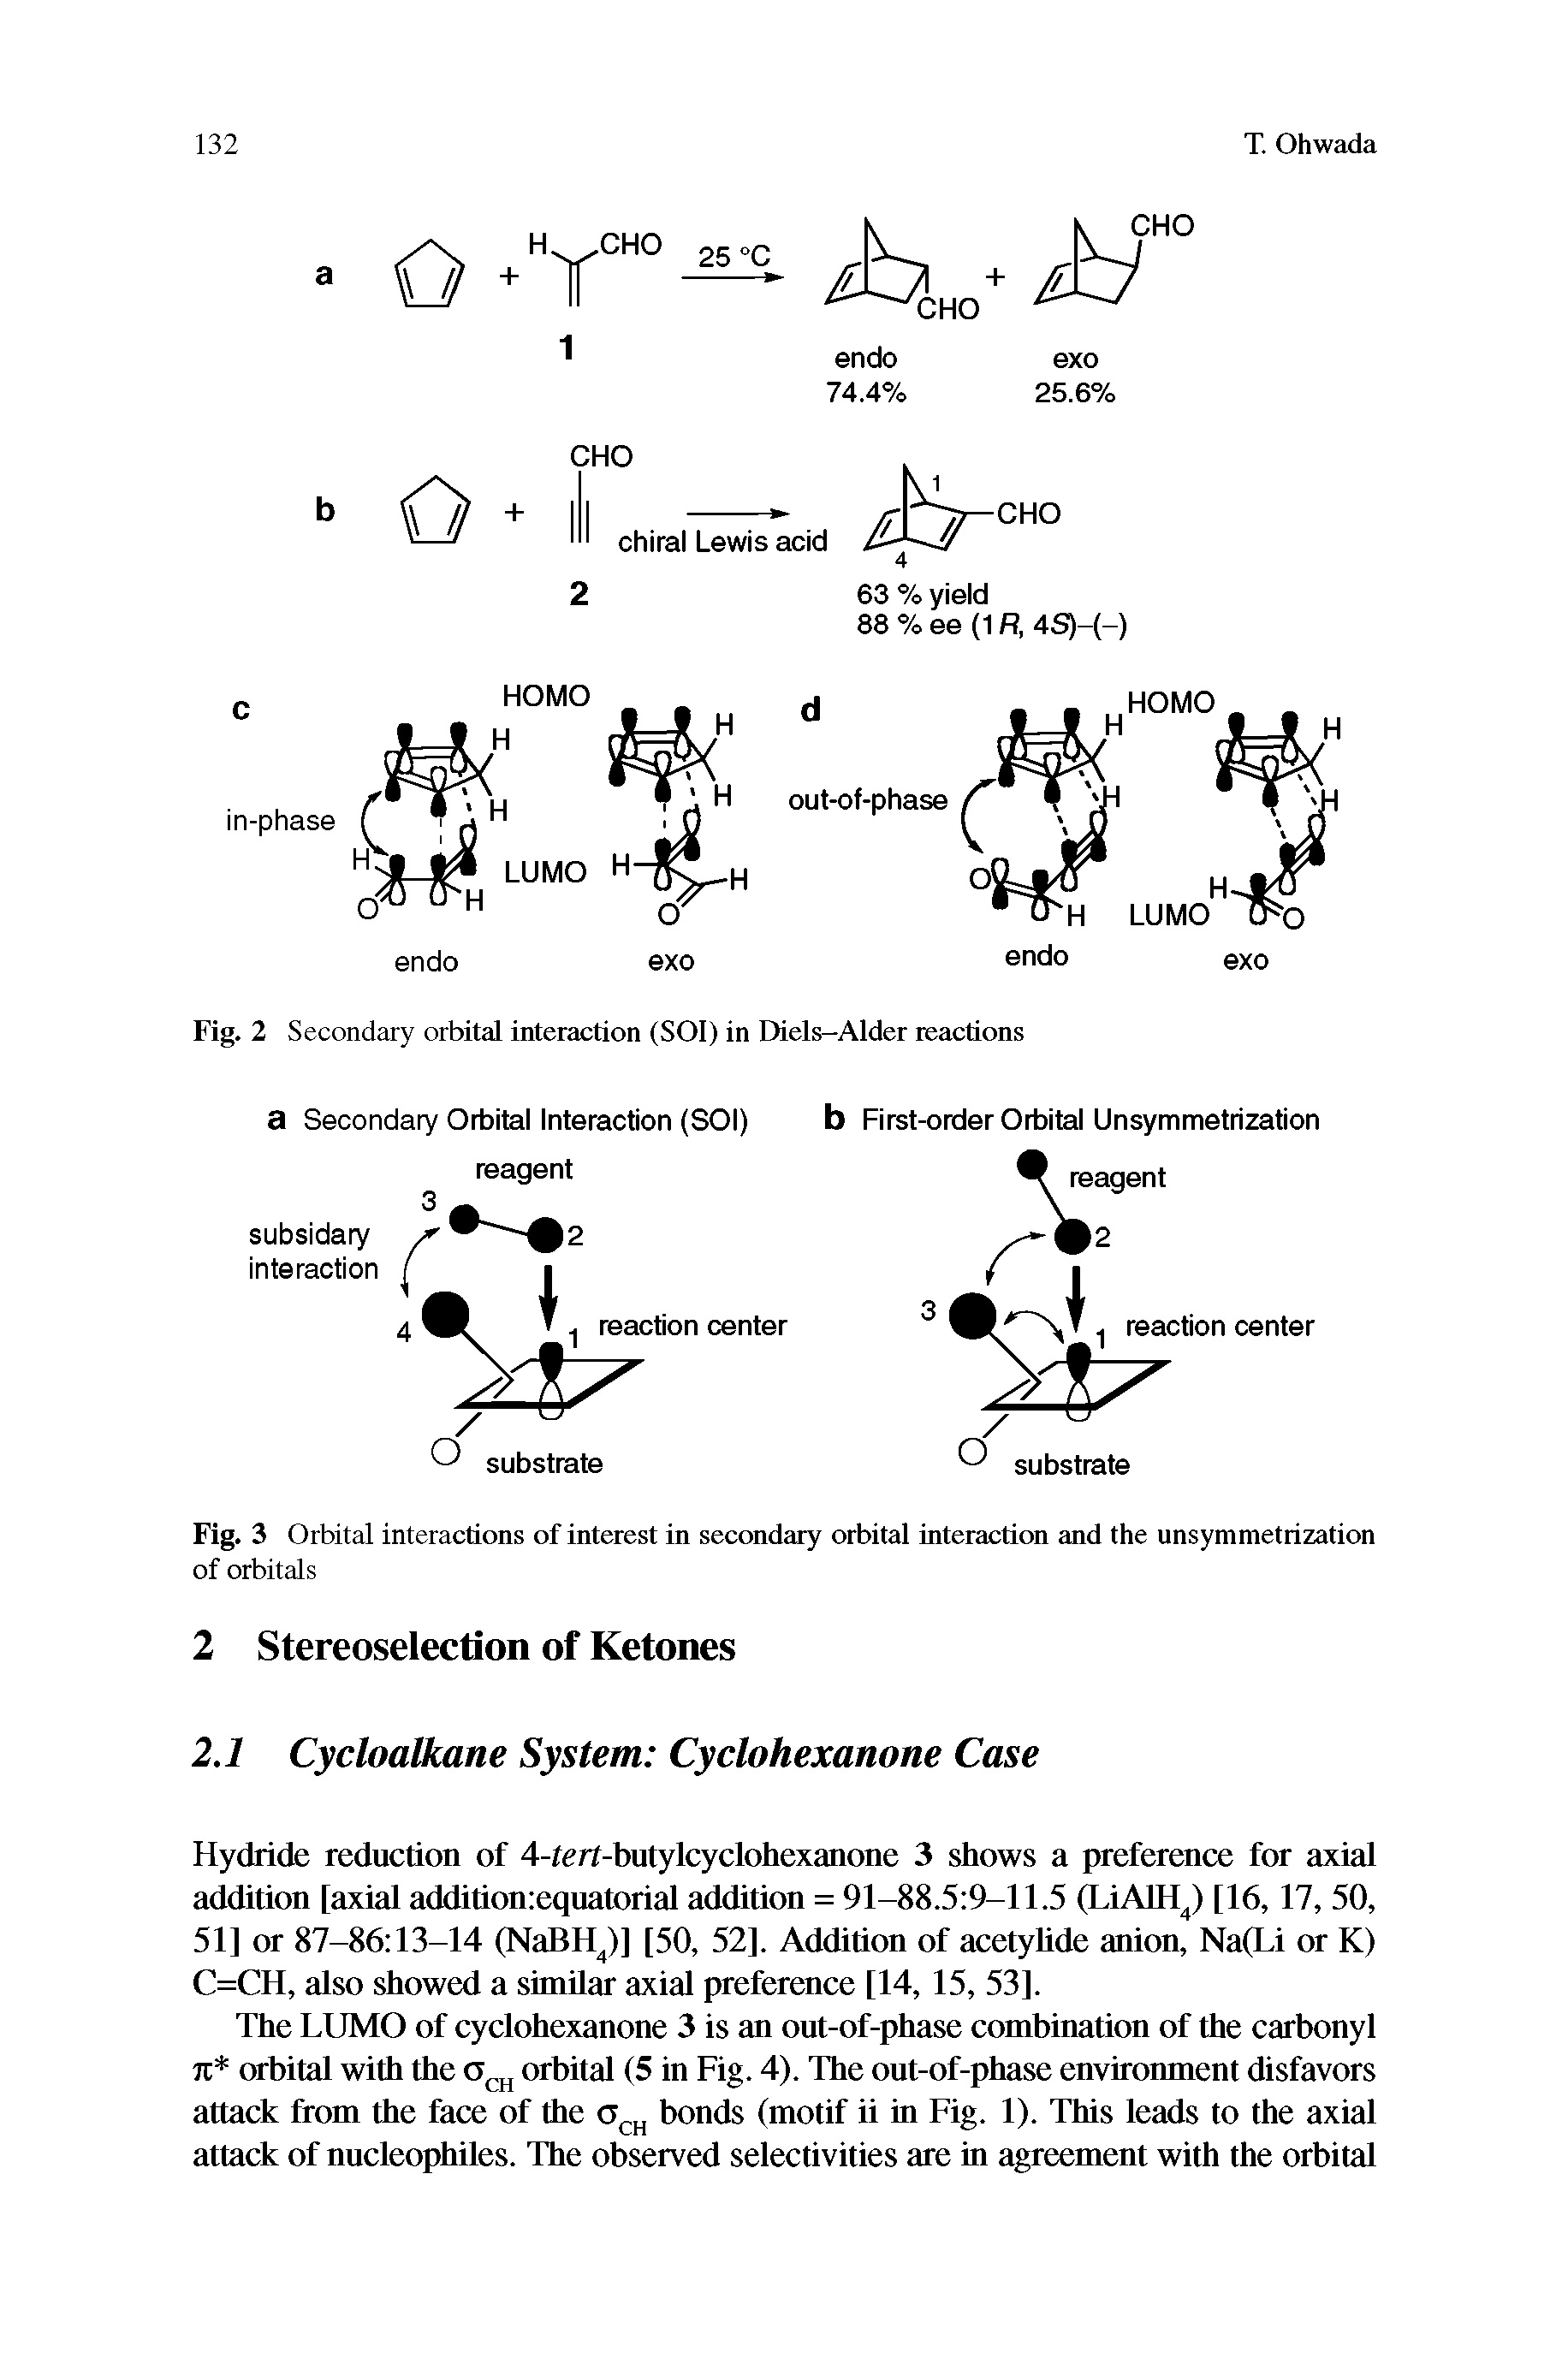 Fig. 2 Secondary orbital interaction (SOI) in Diels-Alder reactions...